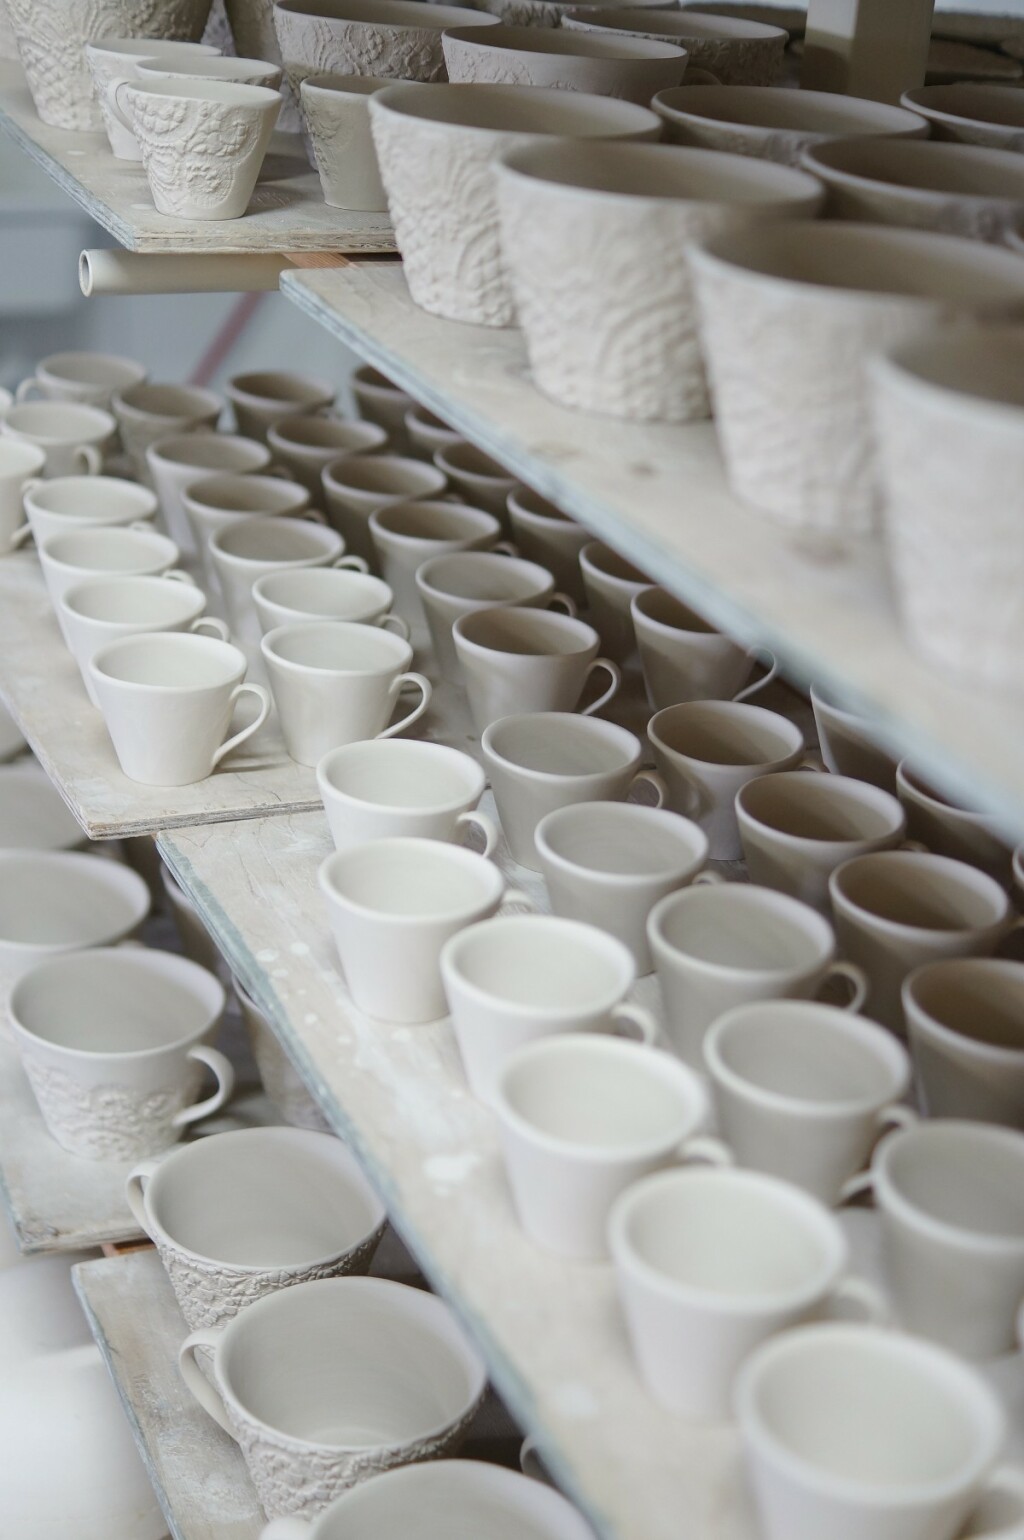 Odeata keramika